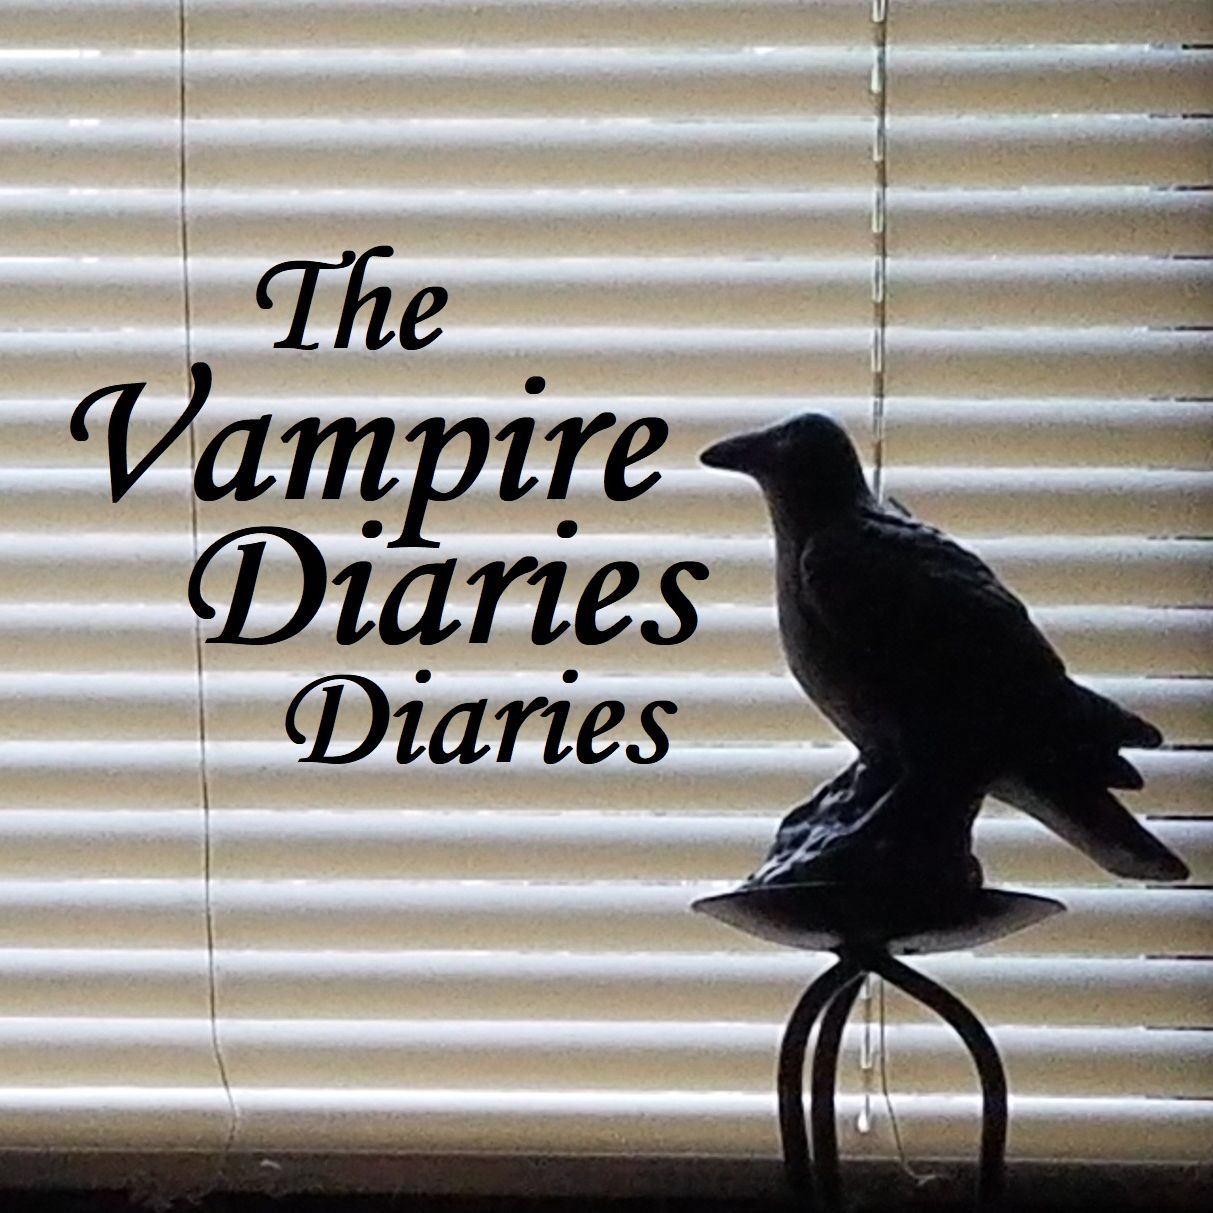 The Vampire Diaries Diaries